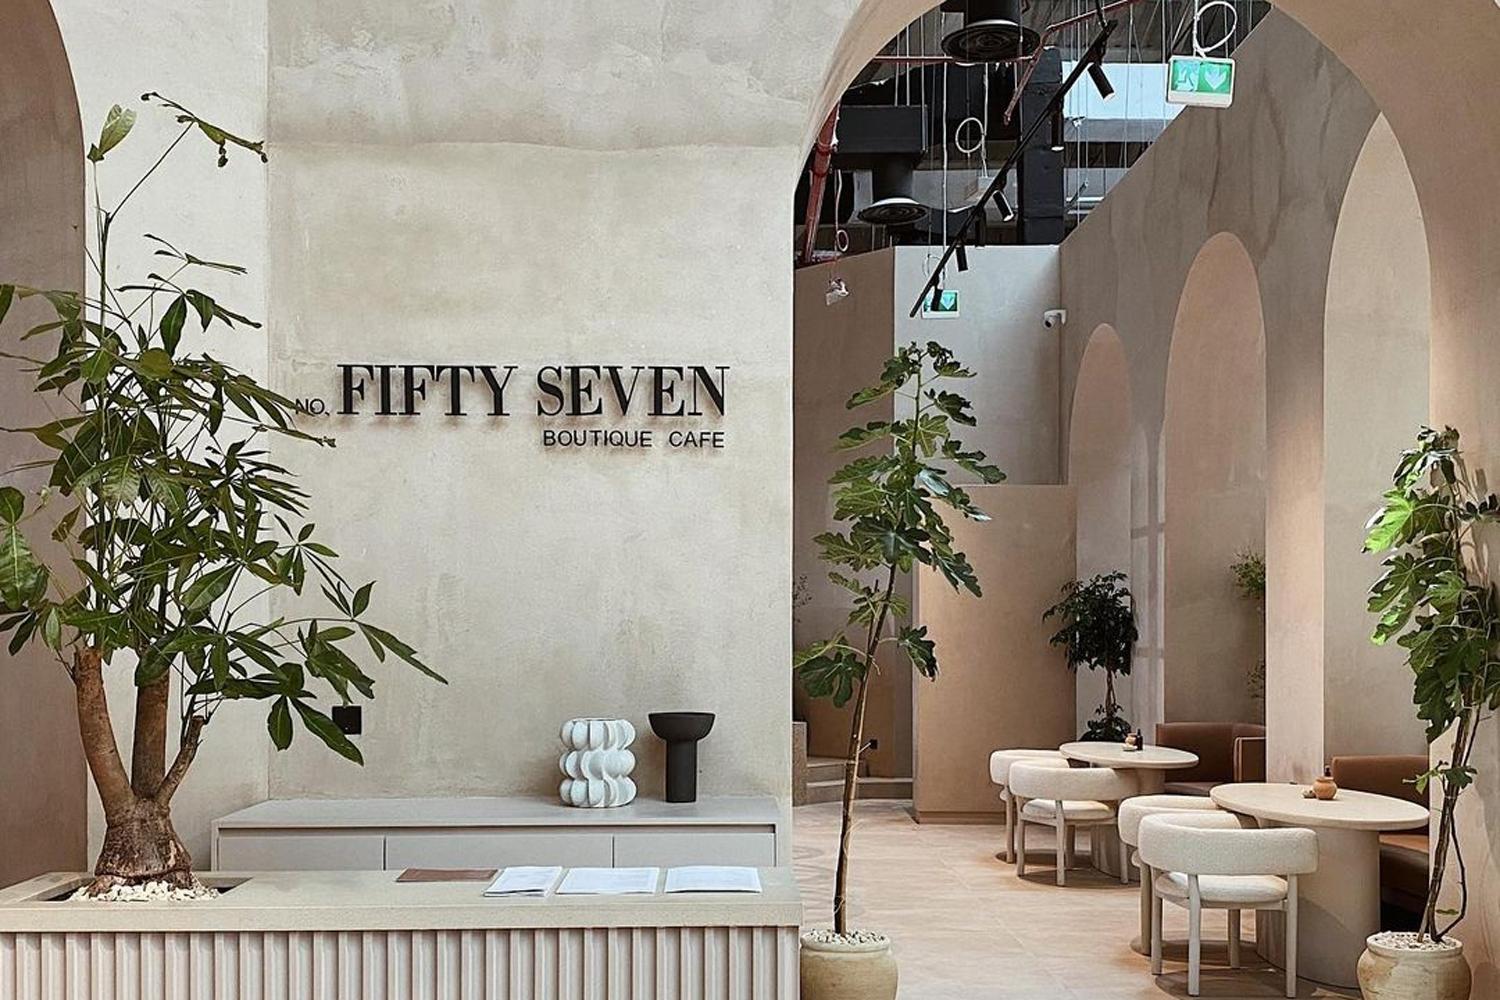 No.Fifty Seven Boutique Cafe